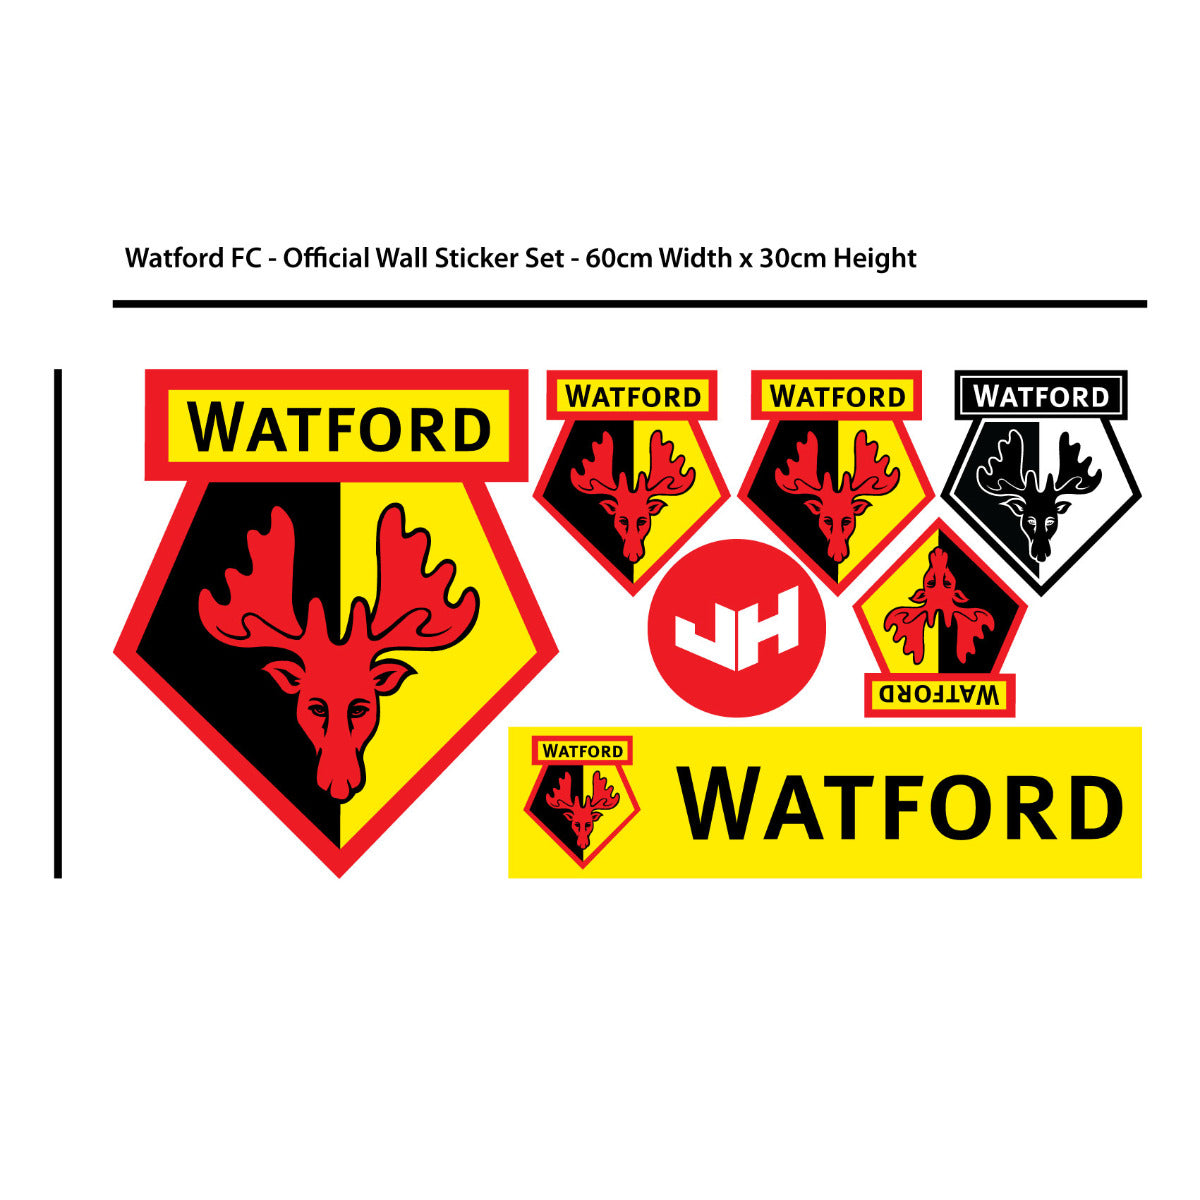 Watford FC -  Smashed Vicarage Road Stadium Crowd Wall Sticker